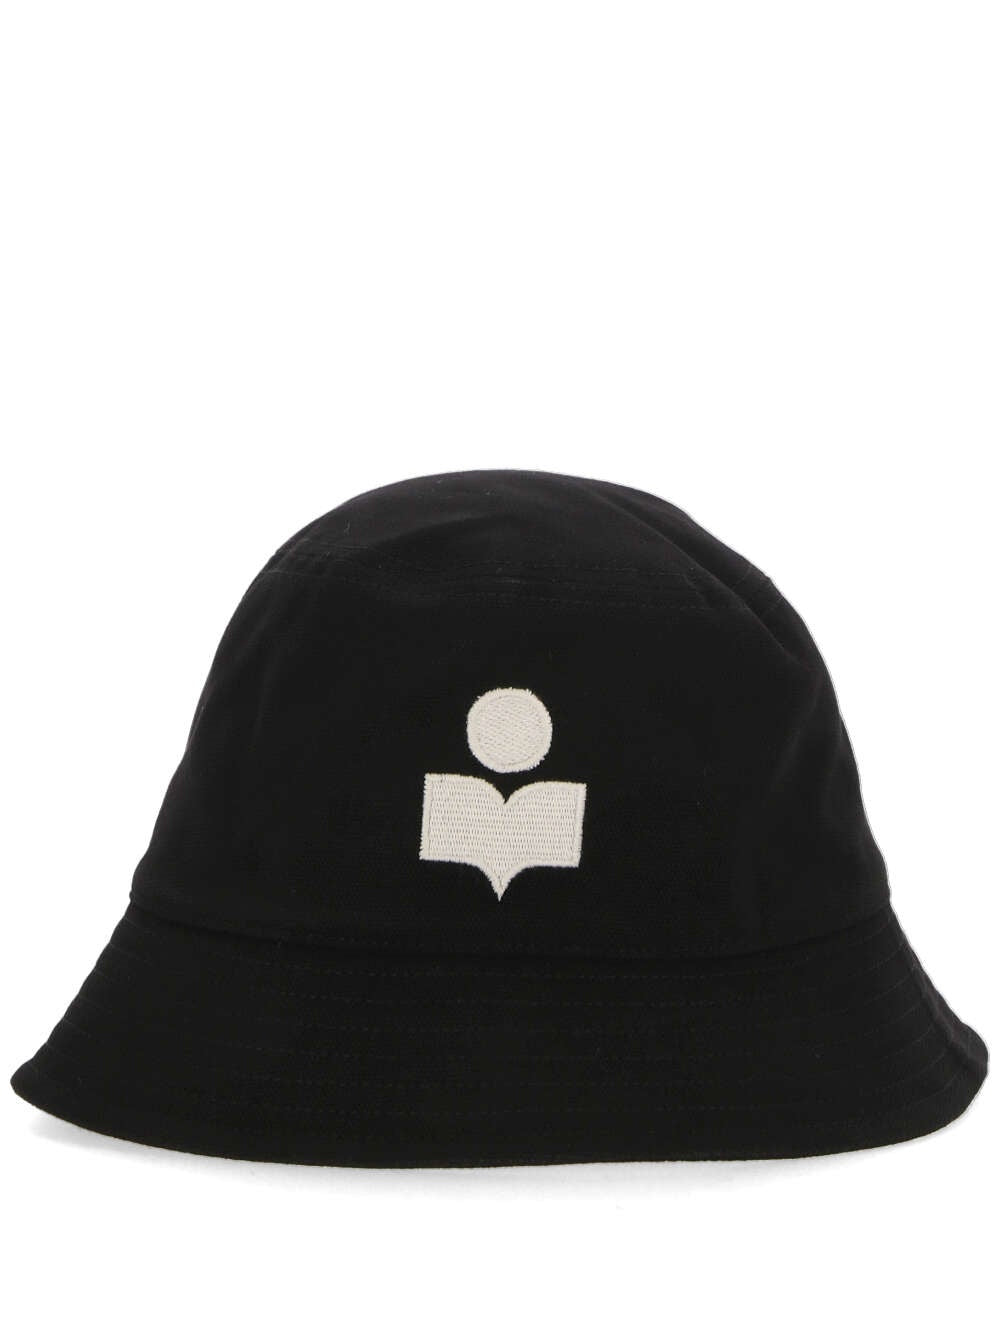 Isabel Marant CU001XFA Woman Black/ecru Hats - Zuklat